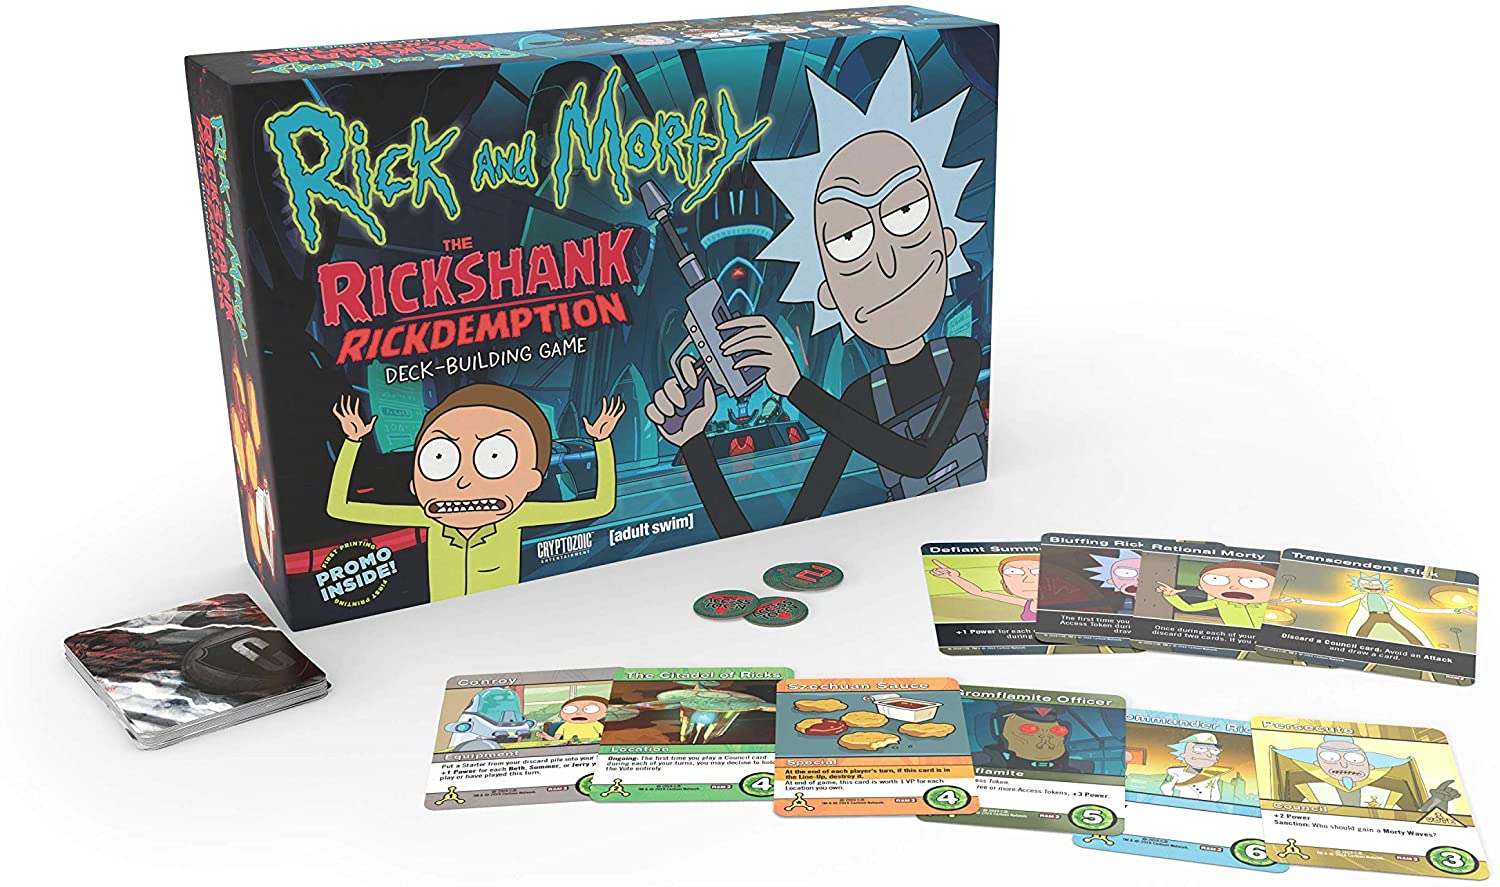 Rick & Morty: The Rickshank Rickdemption სამაგიდო თამაში